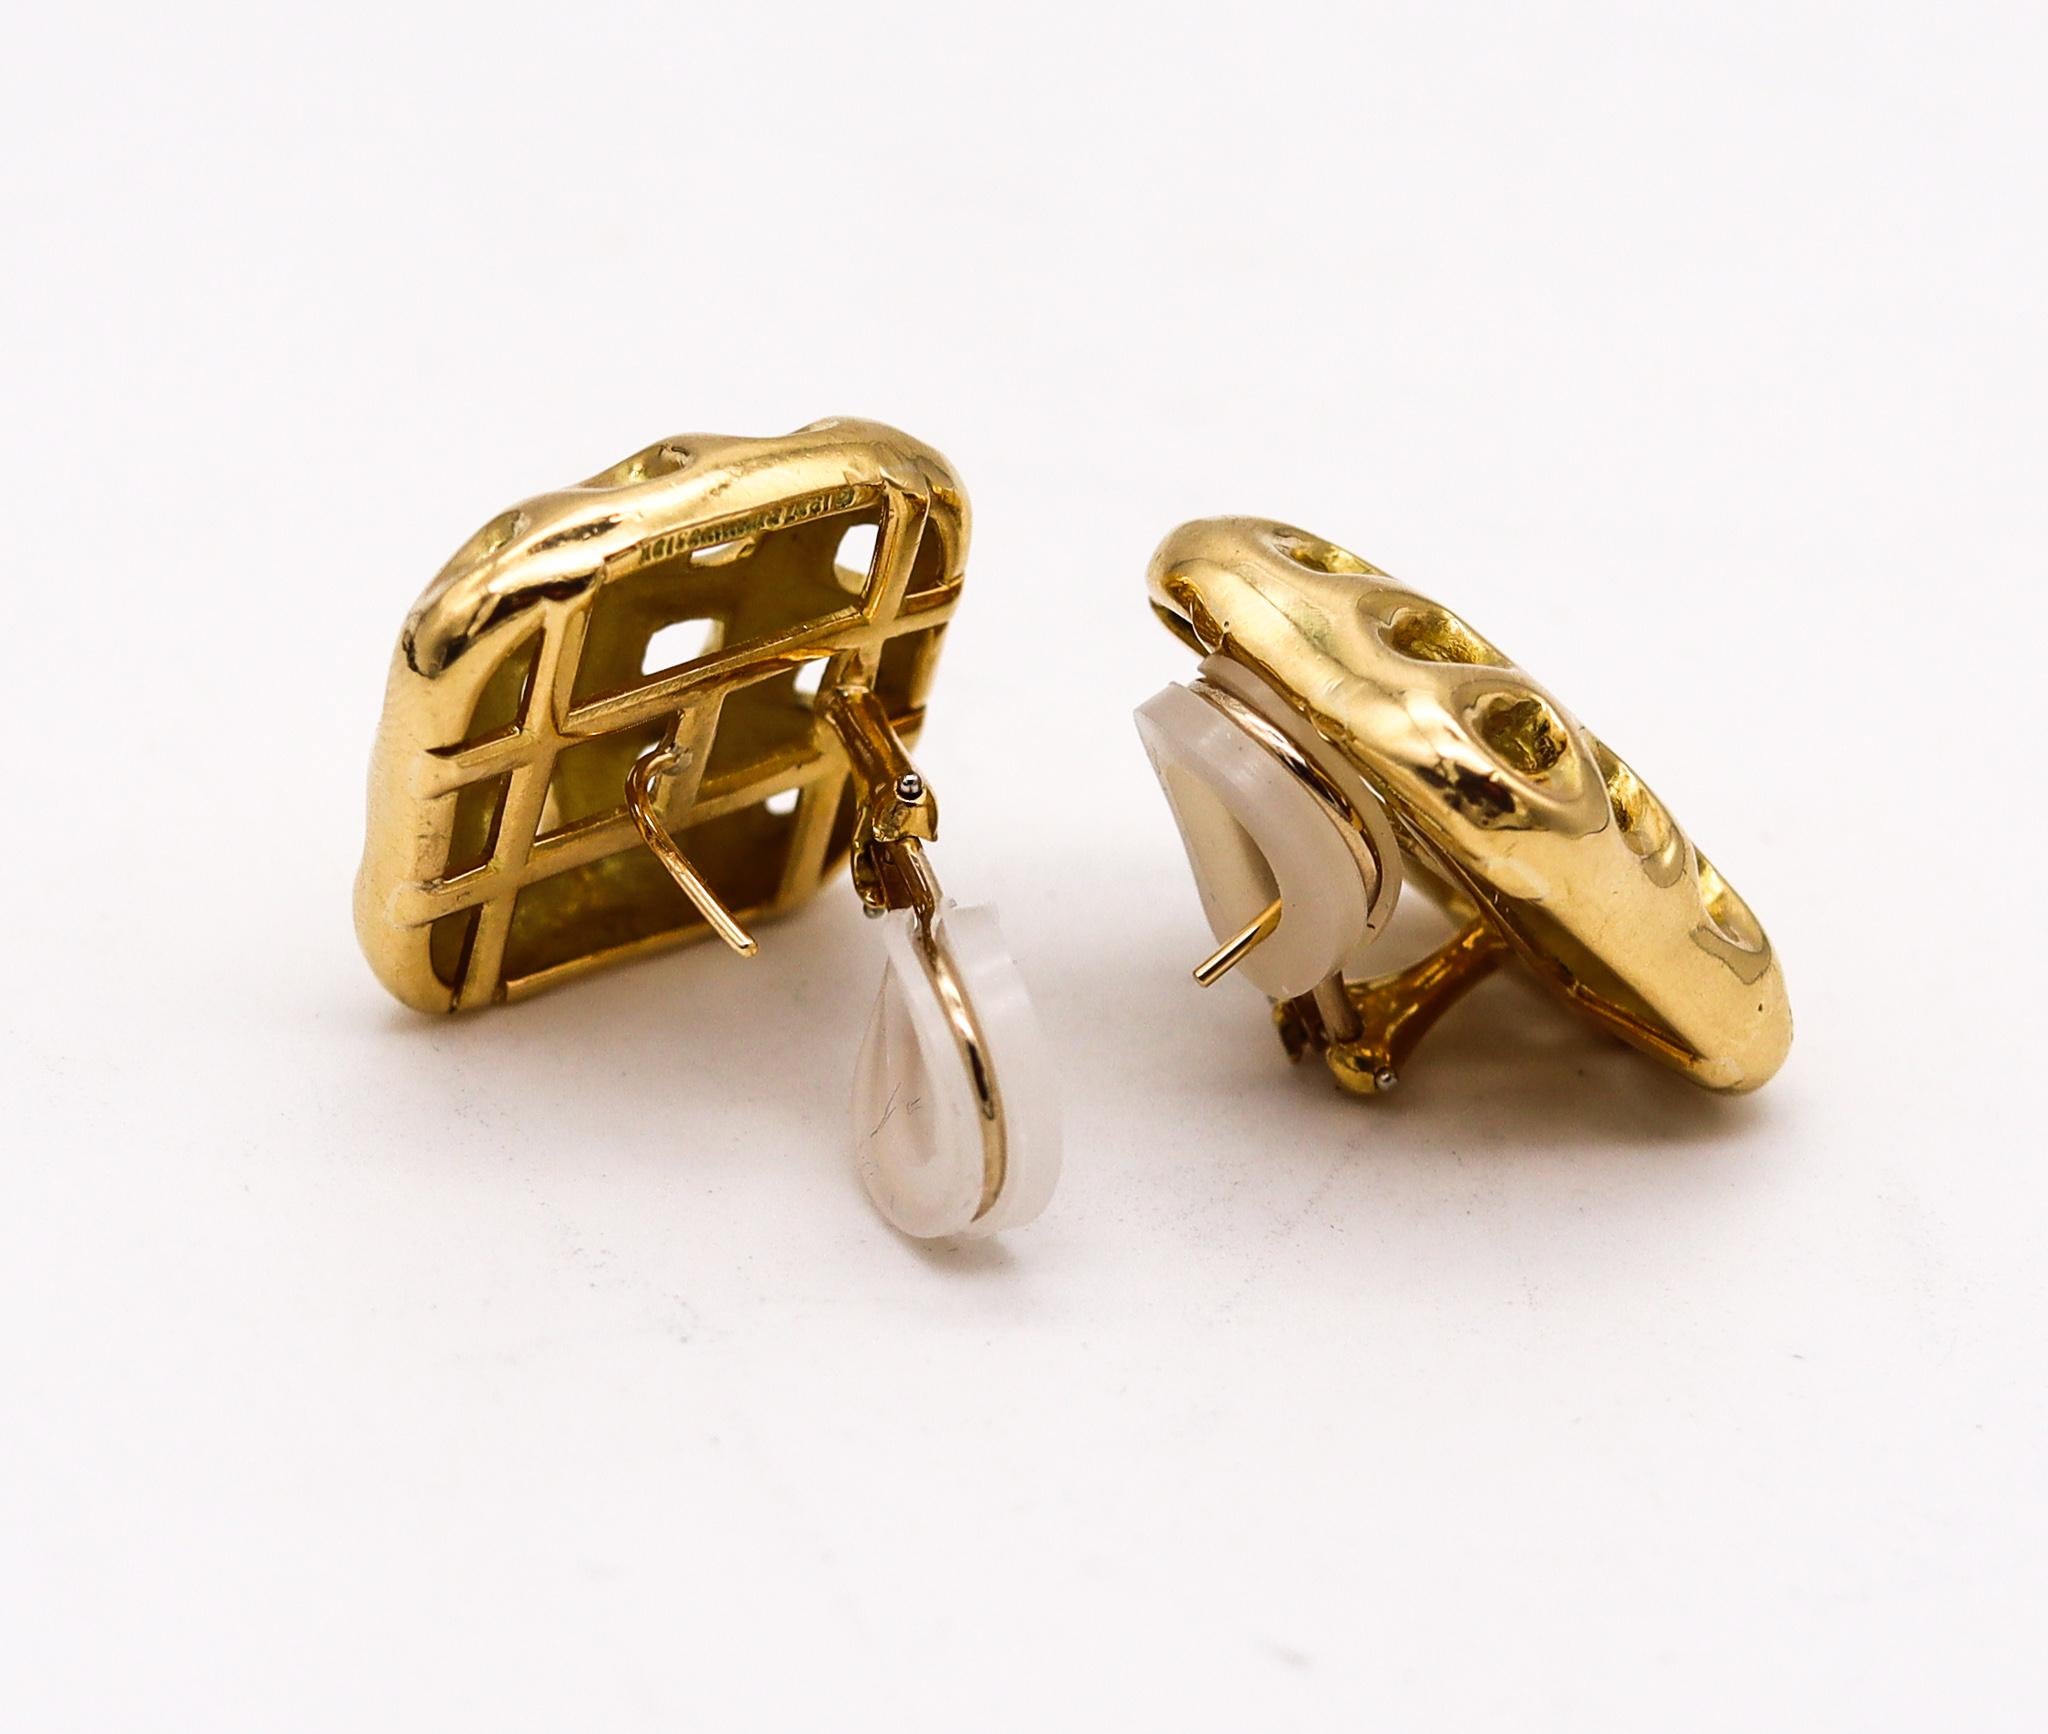 Modernist Angela Cummings Studios 1987 New York Honeycomb Earrings in 18kt Yellow Gold For Sale